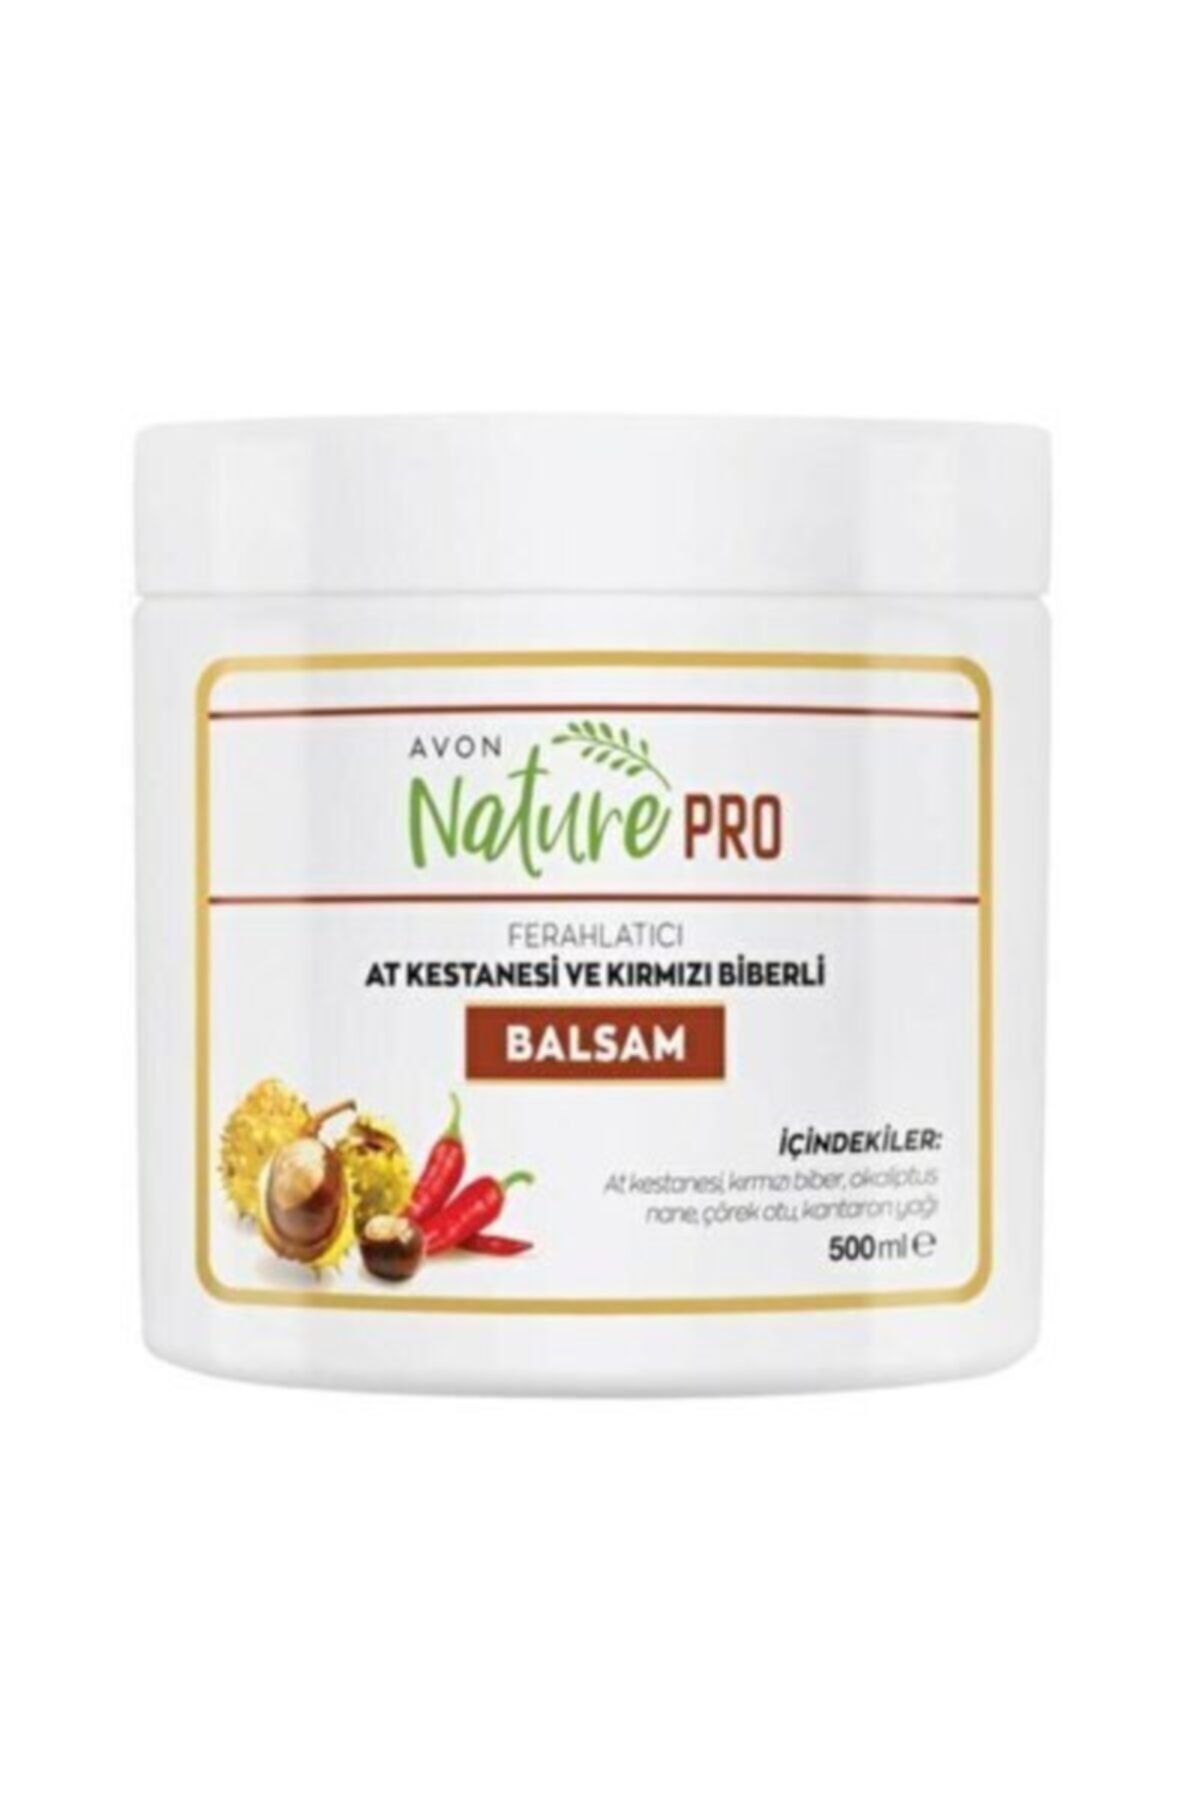 Avon Nature Pro At Kestanesi Ve Kırmızı Biberli Balsam 500 ml